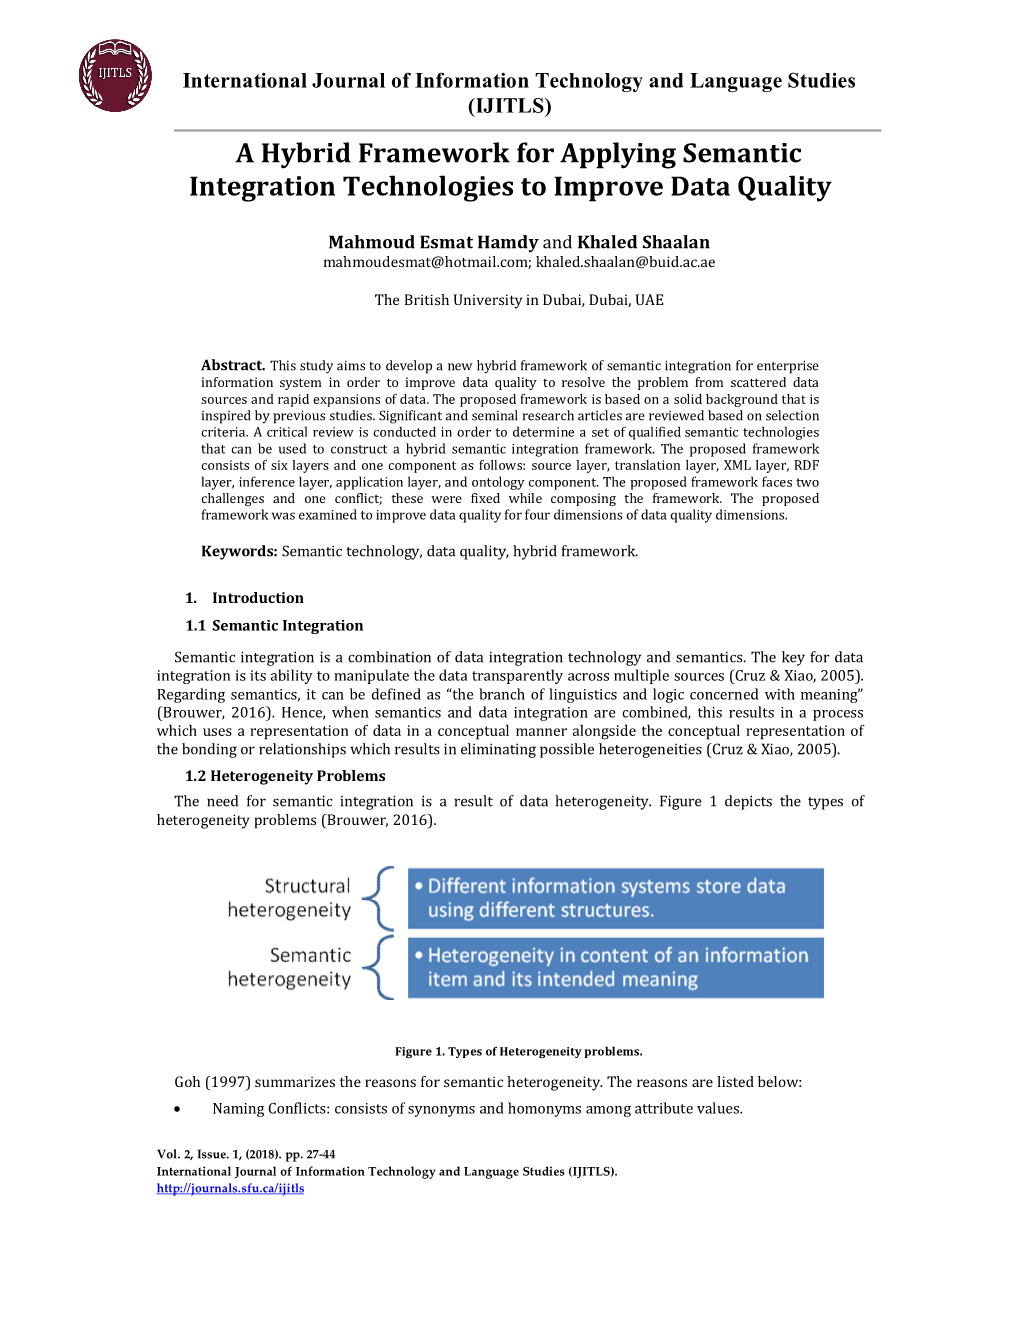 A Hybrid Framework for Applying Semantic Integration Technologies to Improve Data Quality